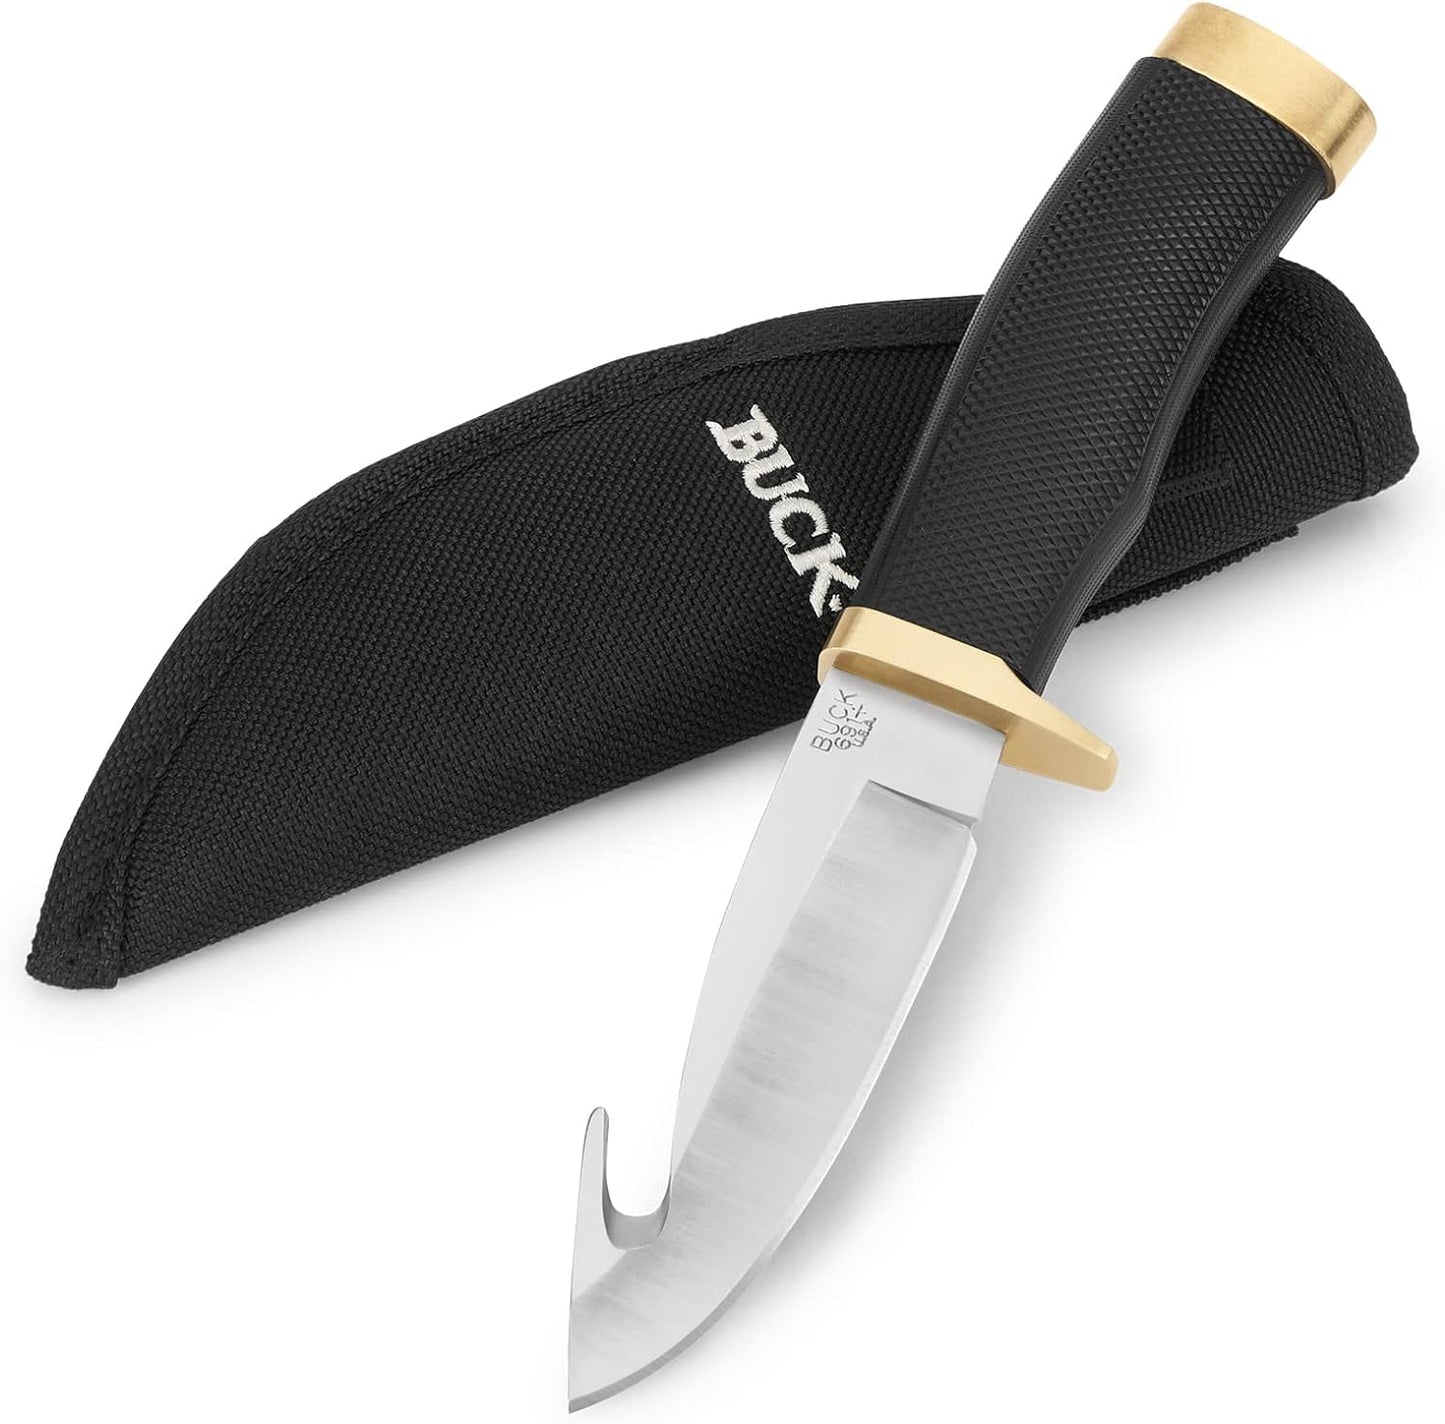 Buck Zipper precision Guthook Fixed Blade For Amazon FBA